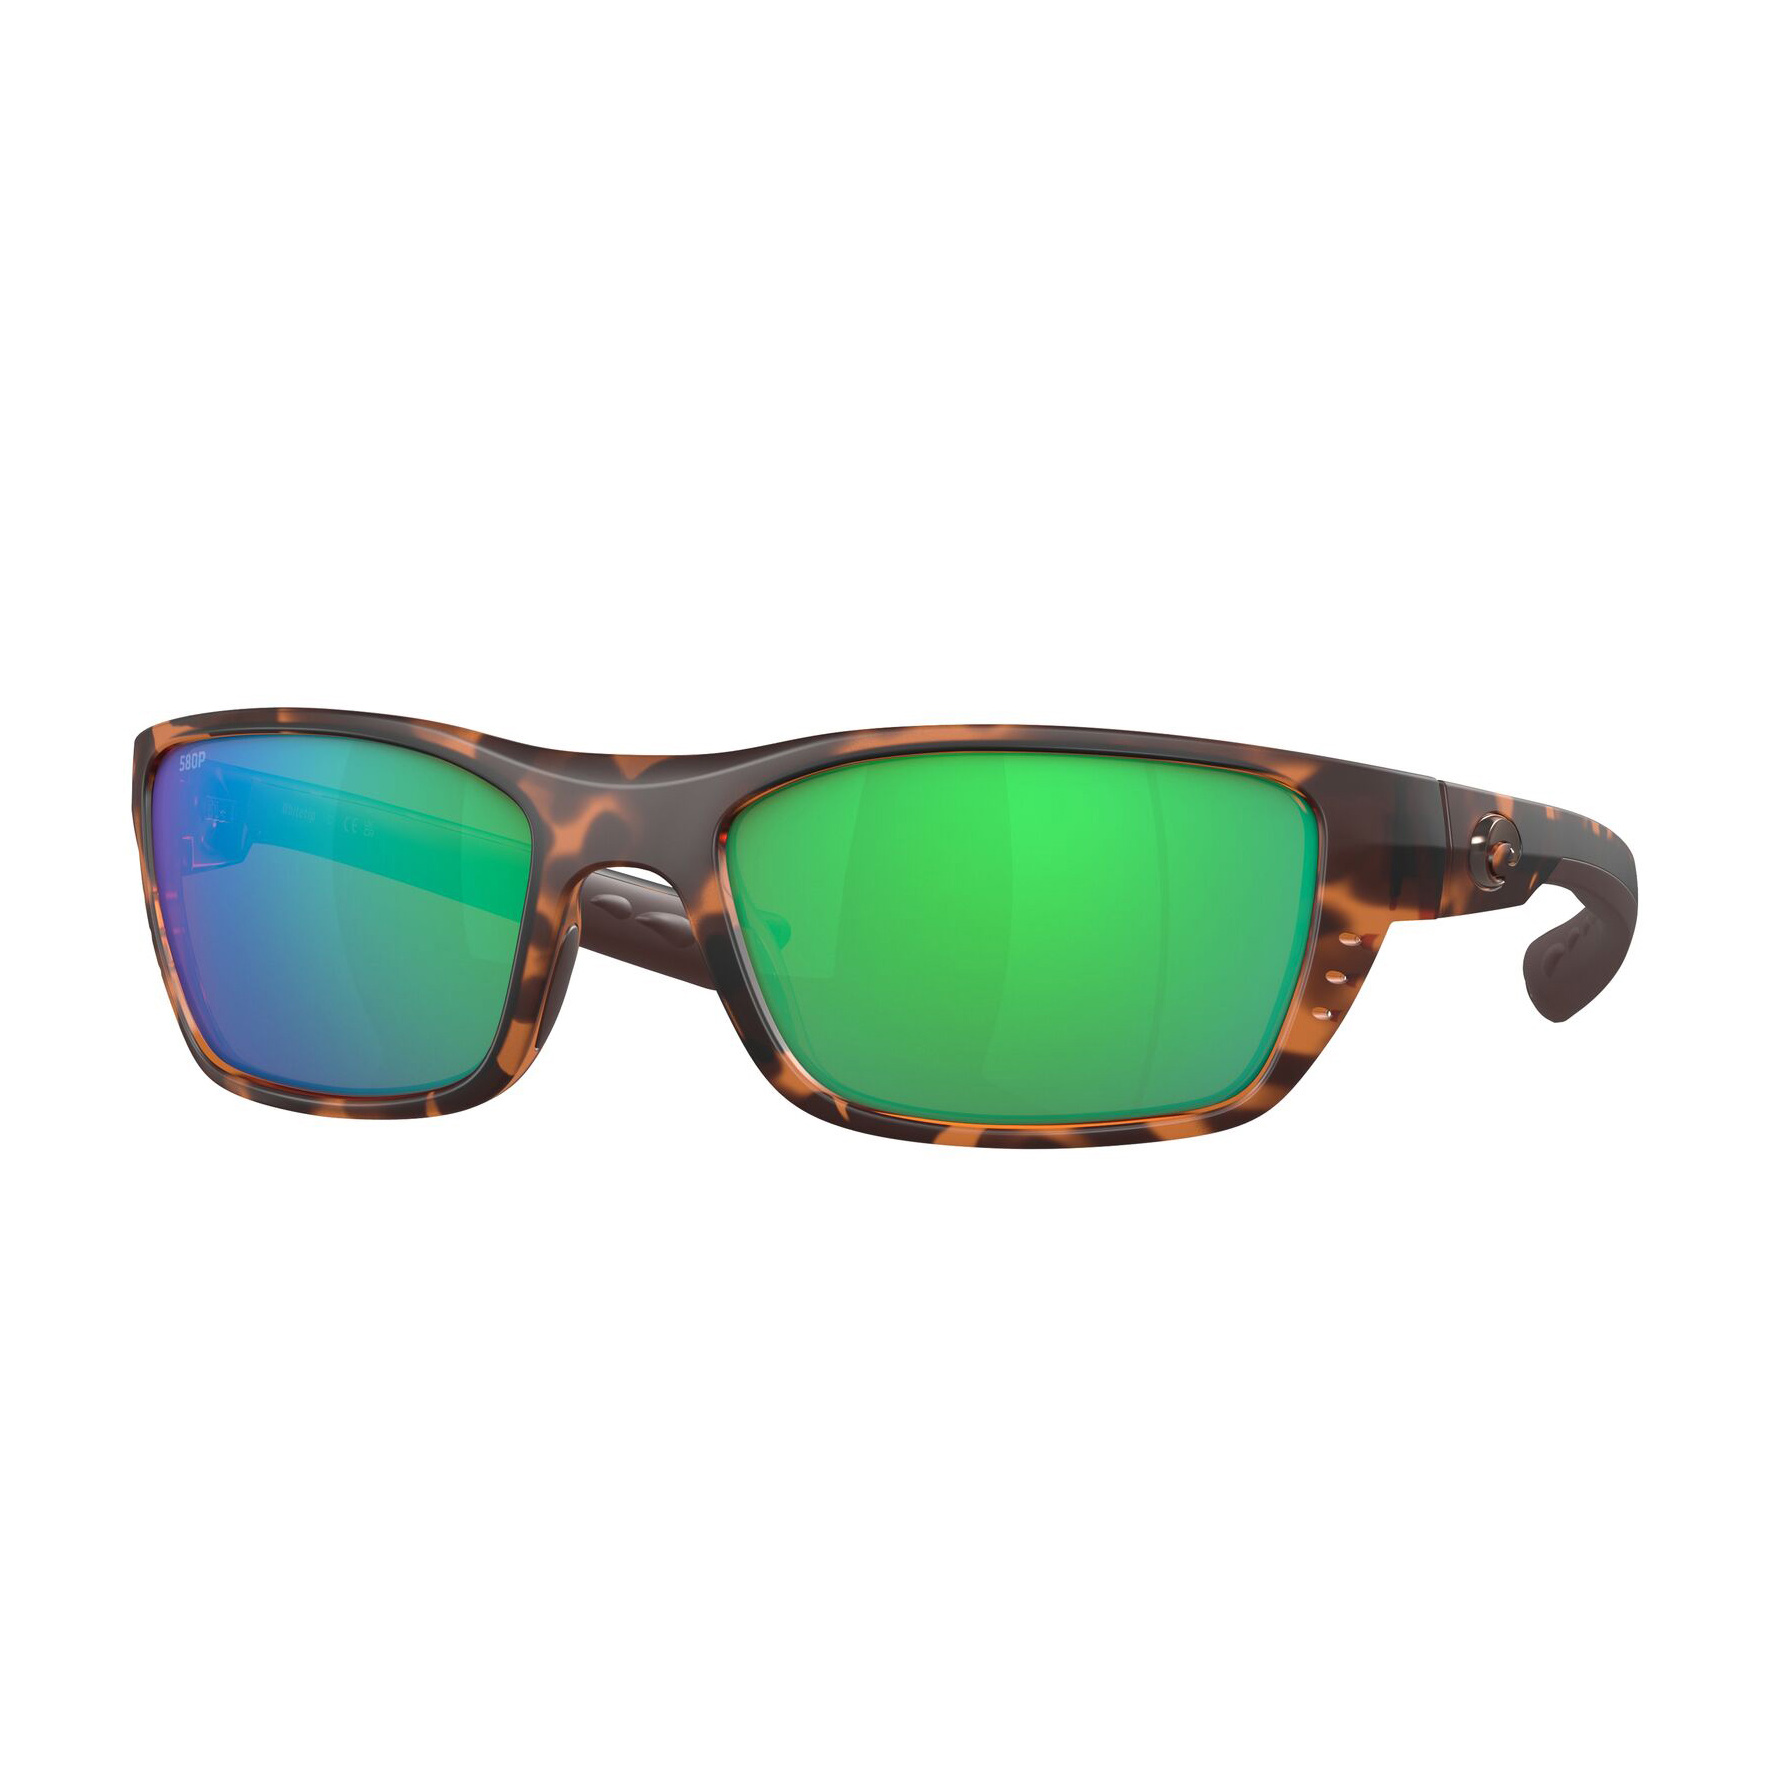 Costa Sunglasses, Whitetip, Matt Retro Tortoise, Green Mirror, 580P